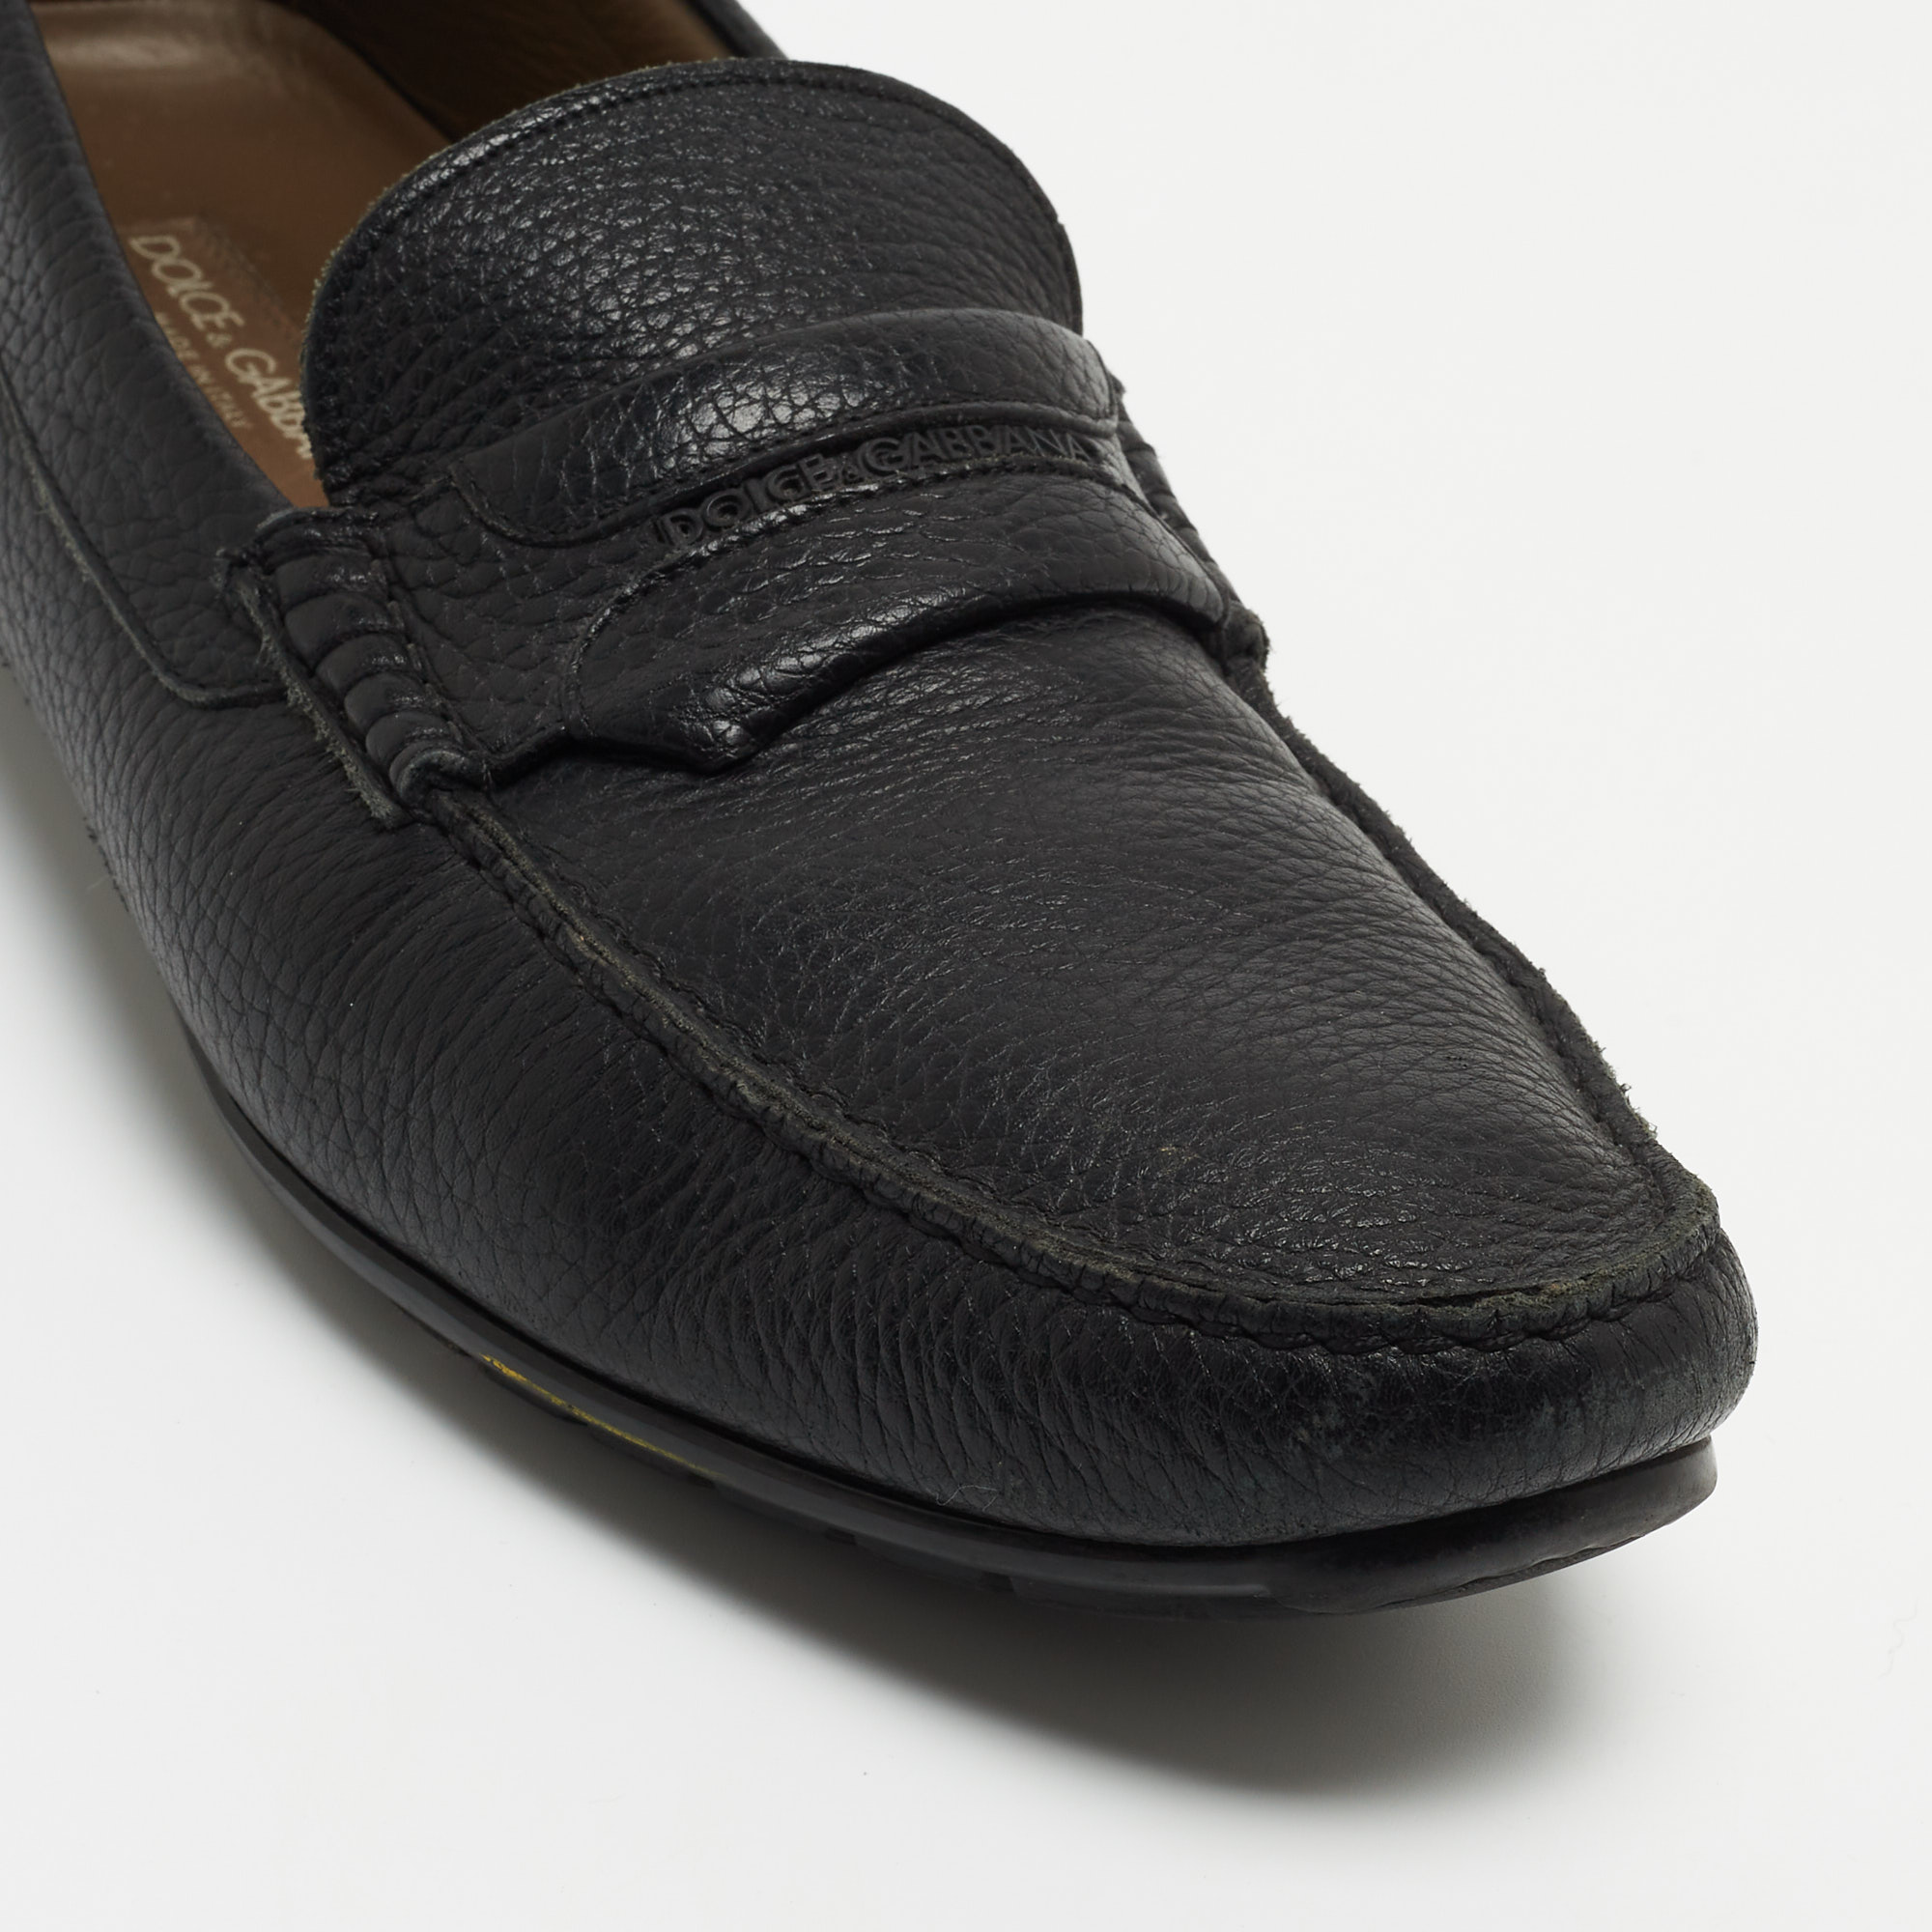 Dolce & Gabbana Black Leather Slip On Loafers Size 44